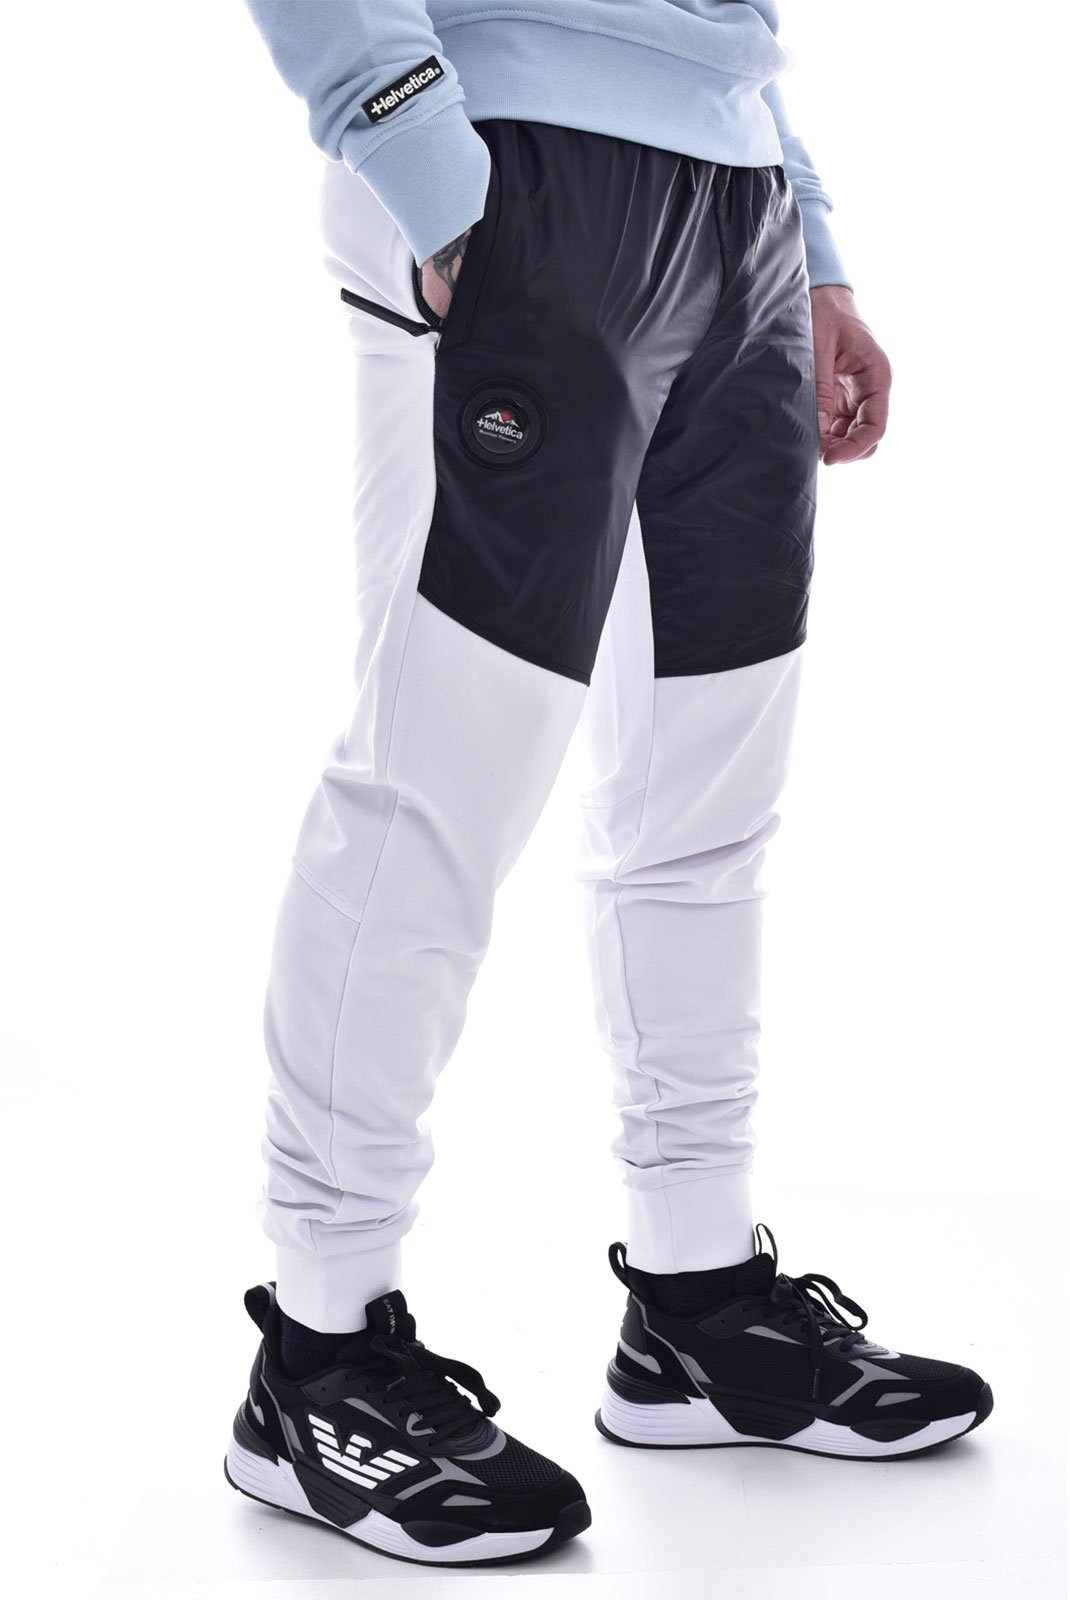 Pantalons sport/streetwear  Helvetica DODGE WHITE